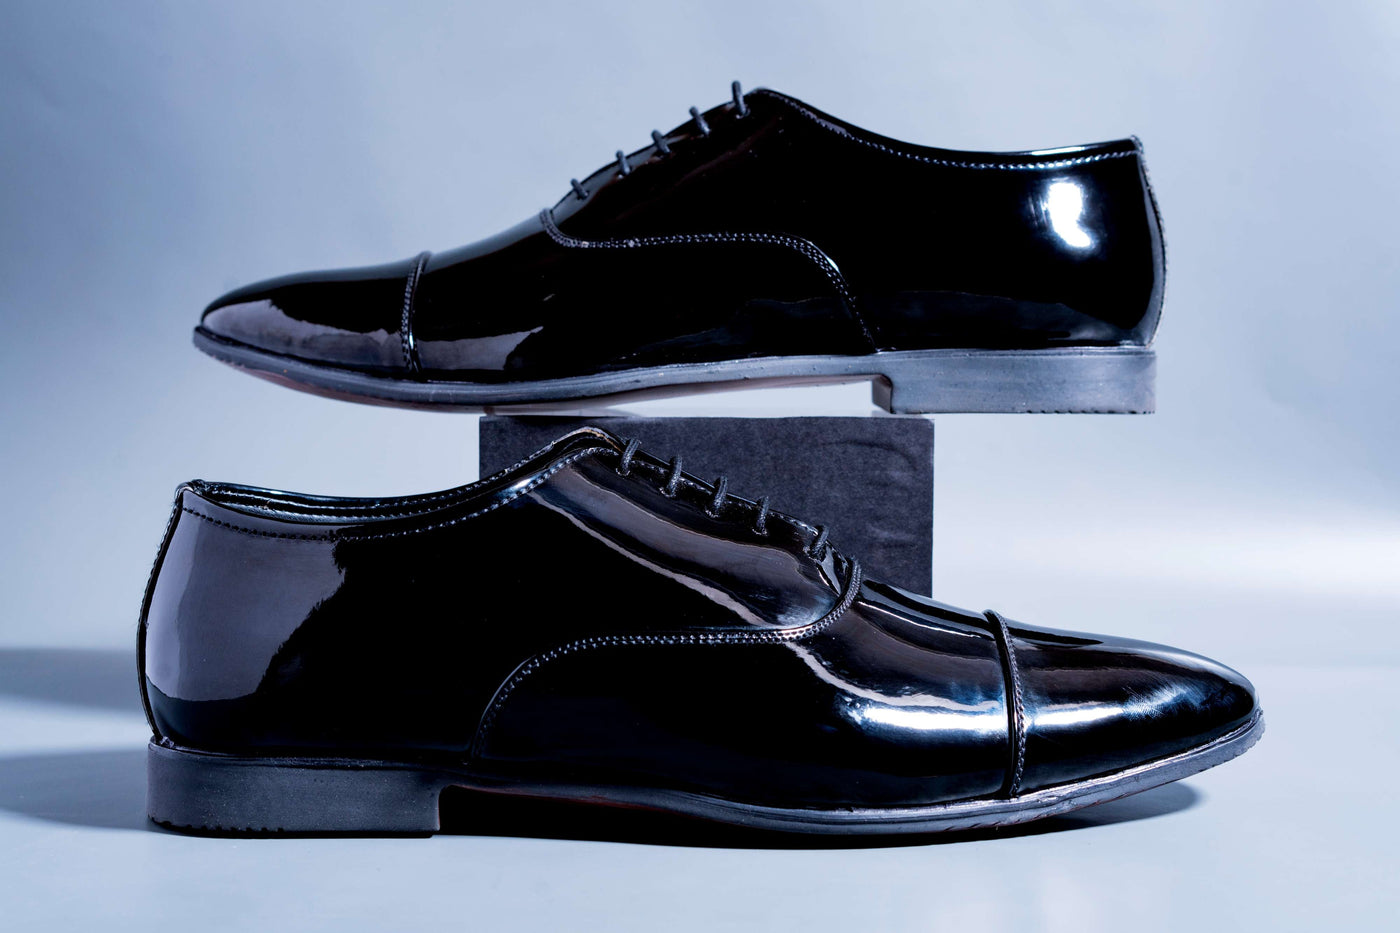 Shiny Black Men's Wear Pattern Premium Design Quality Oxford Formal Shoes-Unique and Classy